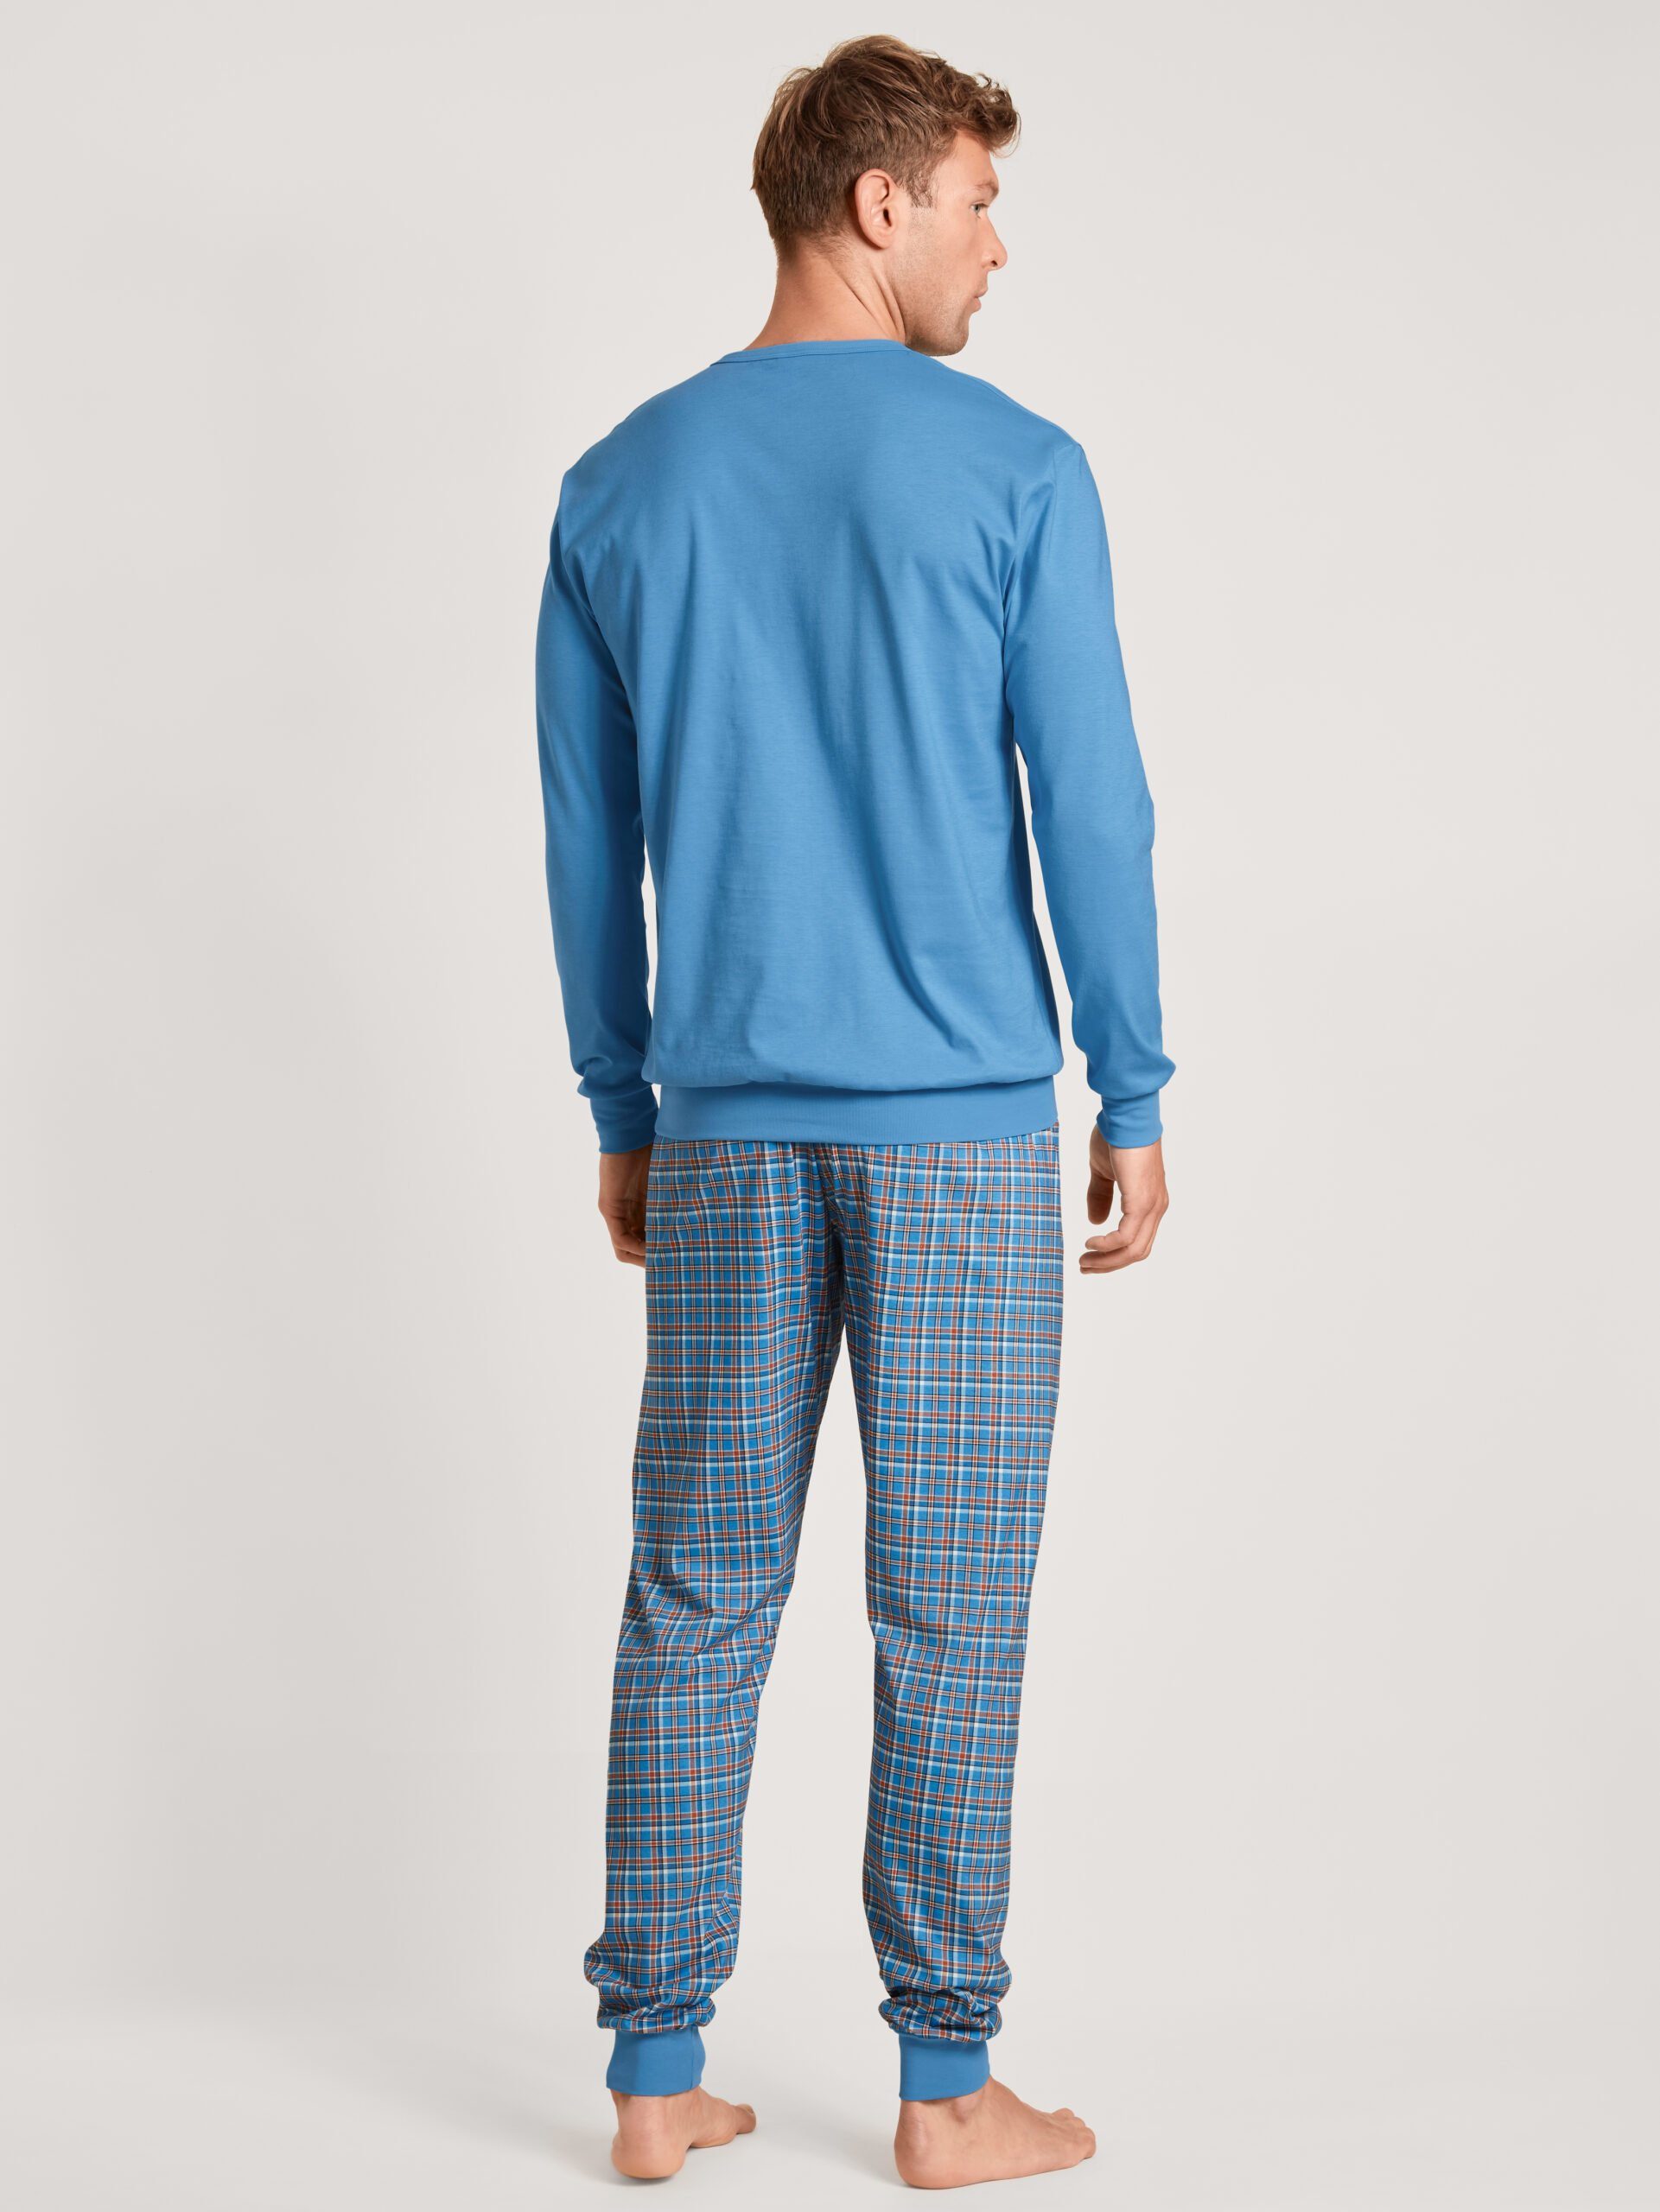 CALIDA Pyjama Calida tlg., (1 blue azurit 1 1 44684 Stück) Stück, Herrenbündchenpyjama